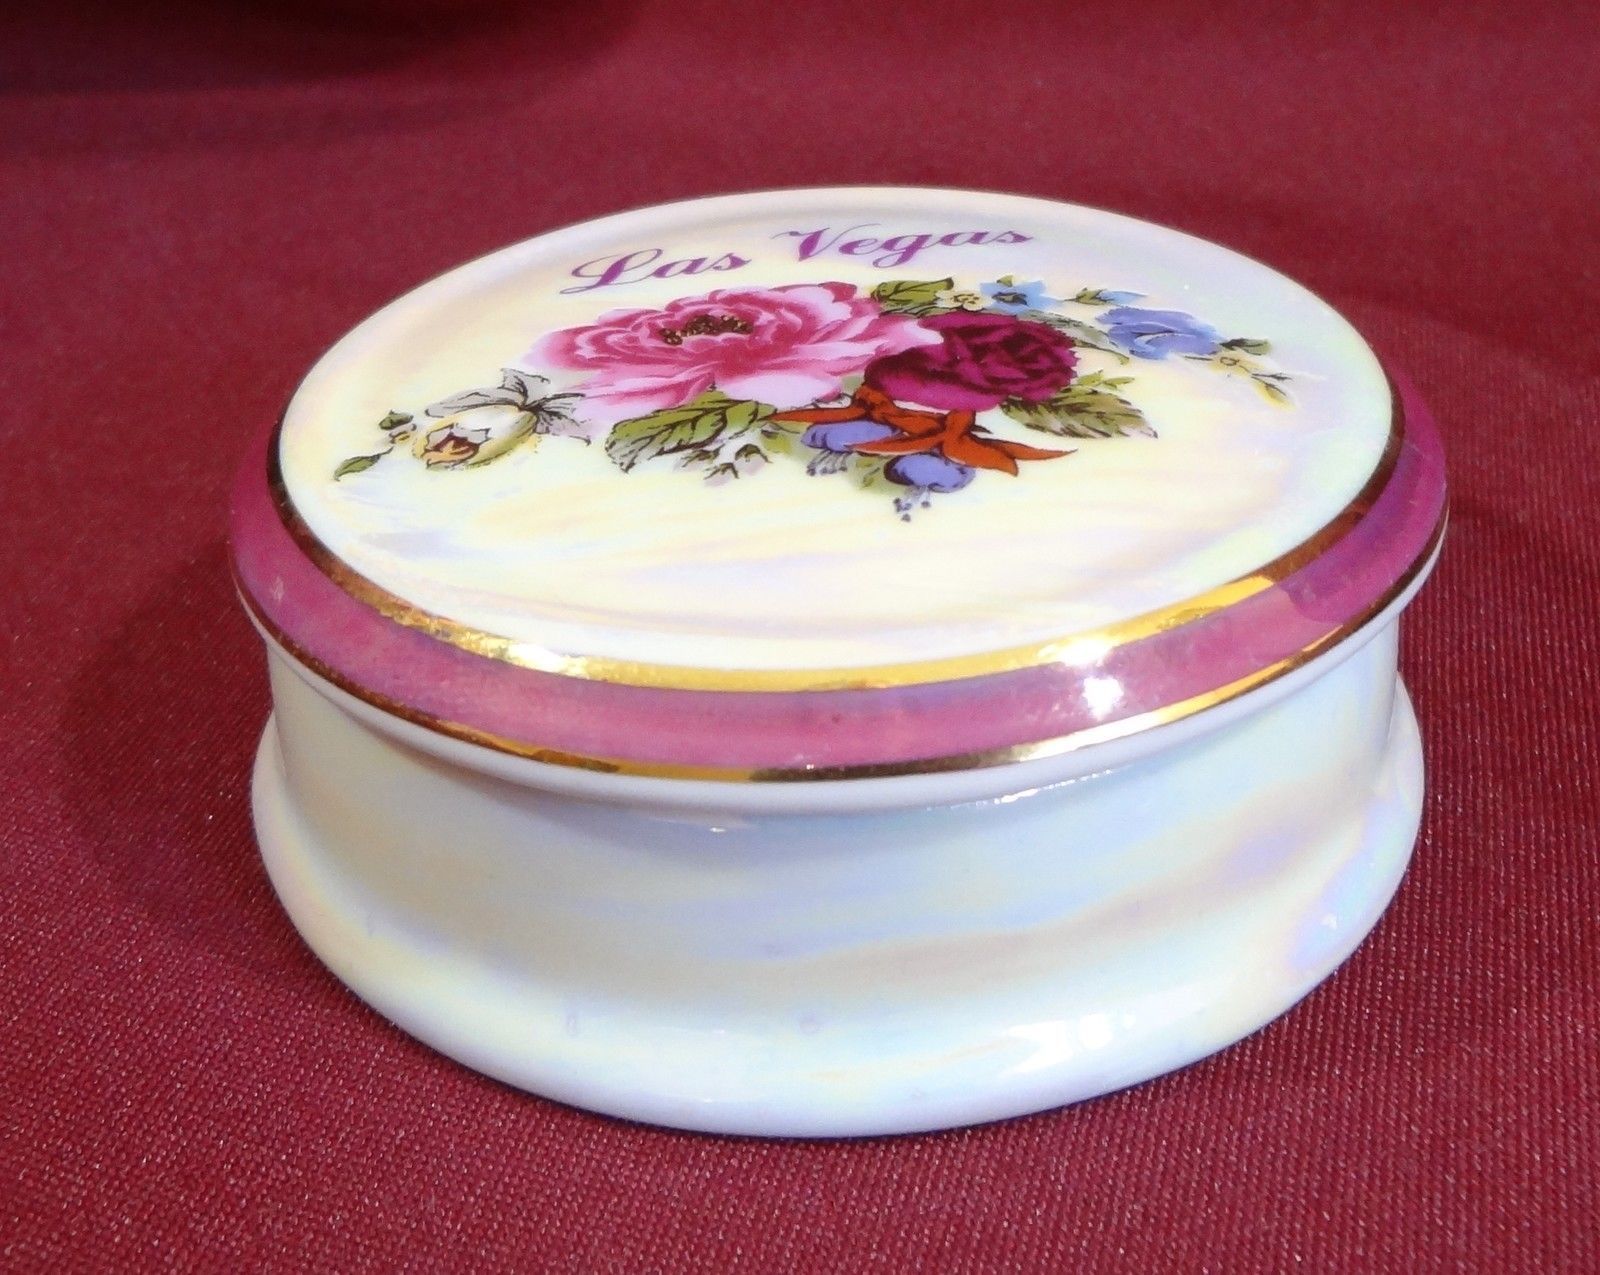 Las Vegas Opalescent Round Floral Trinket Box Ceramic  - $6.99